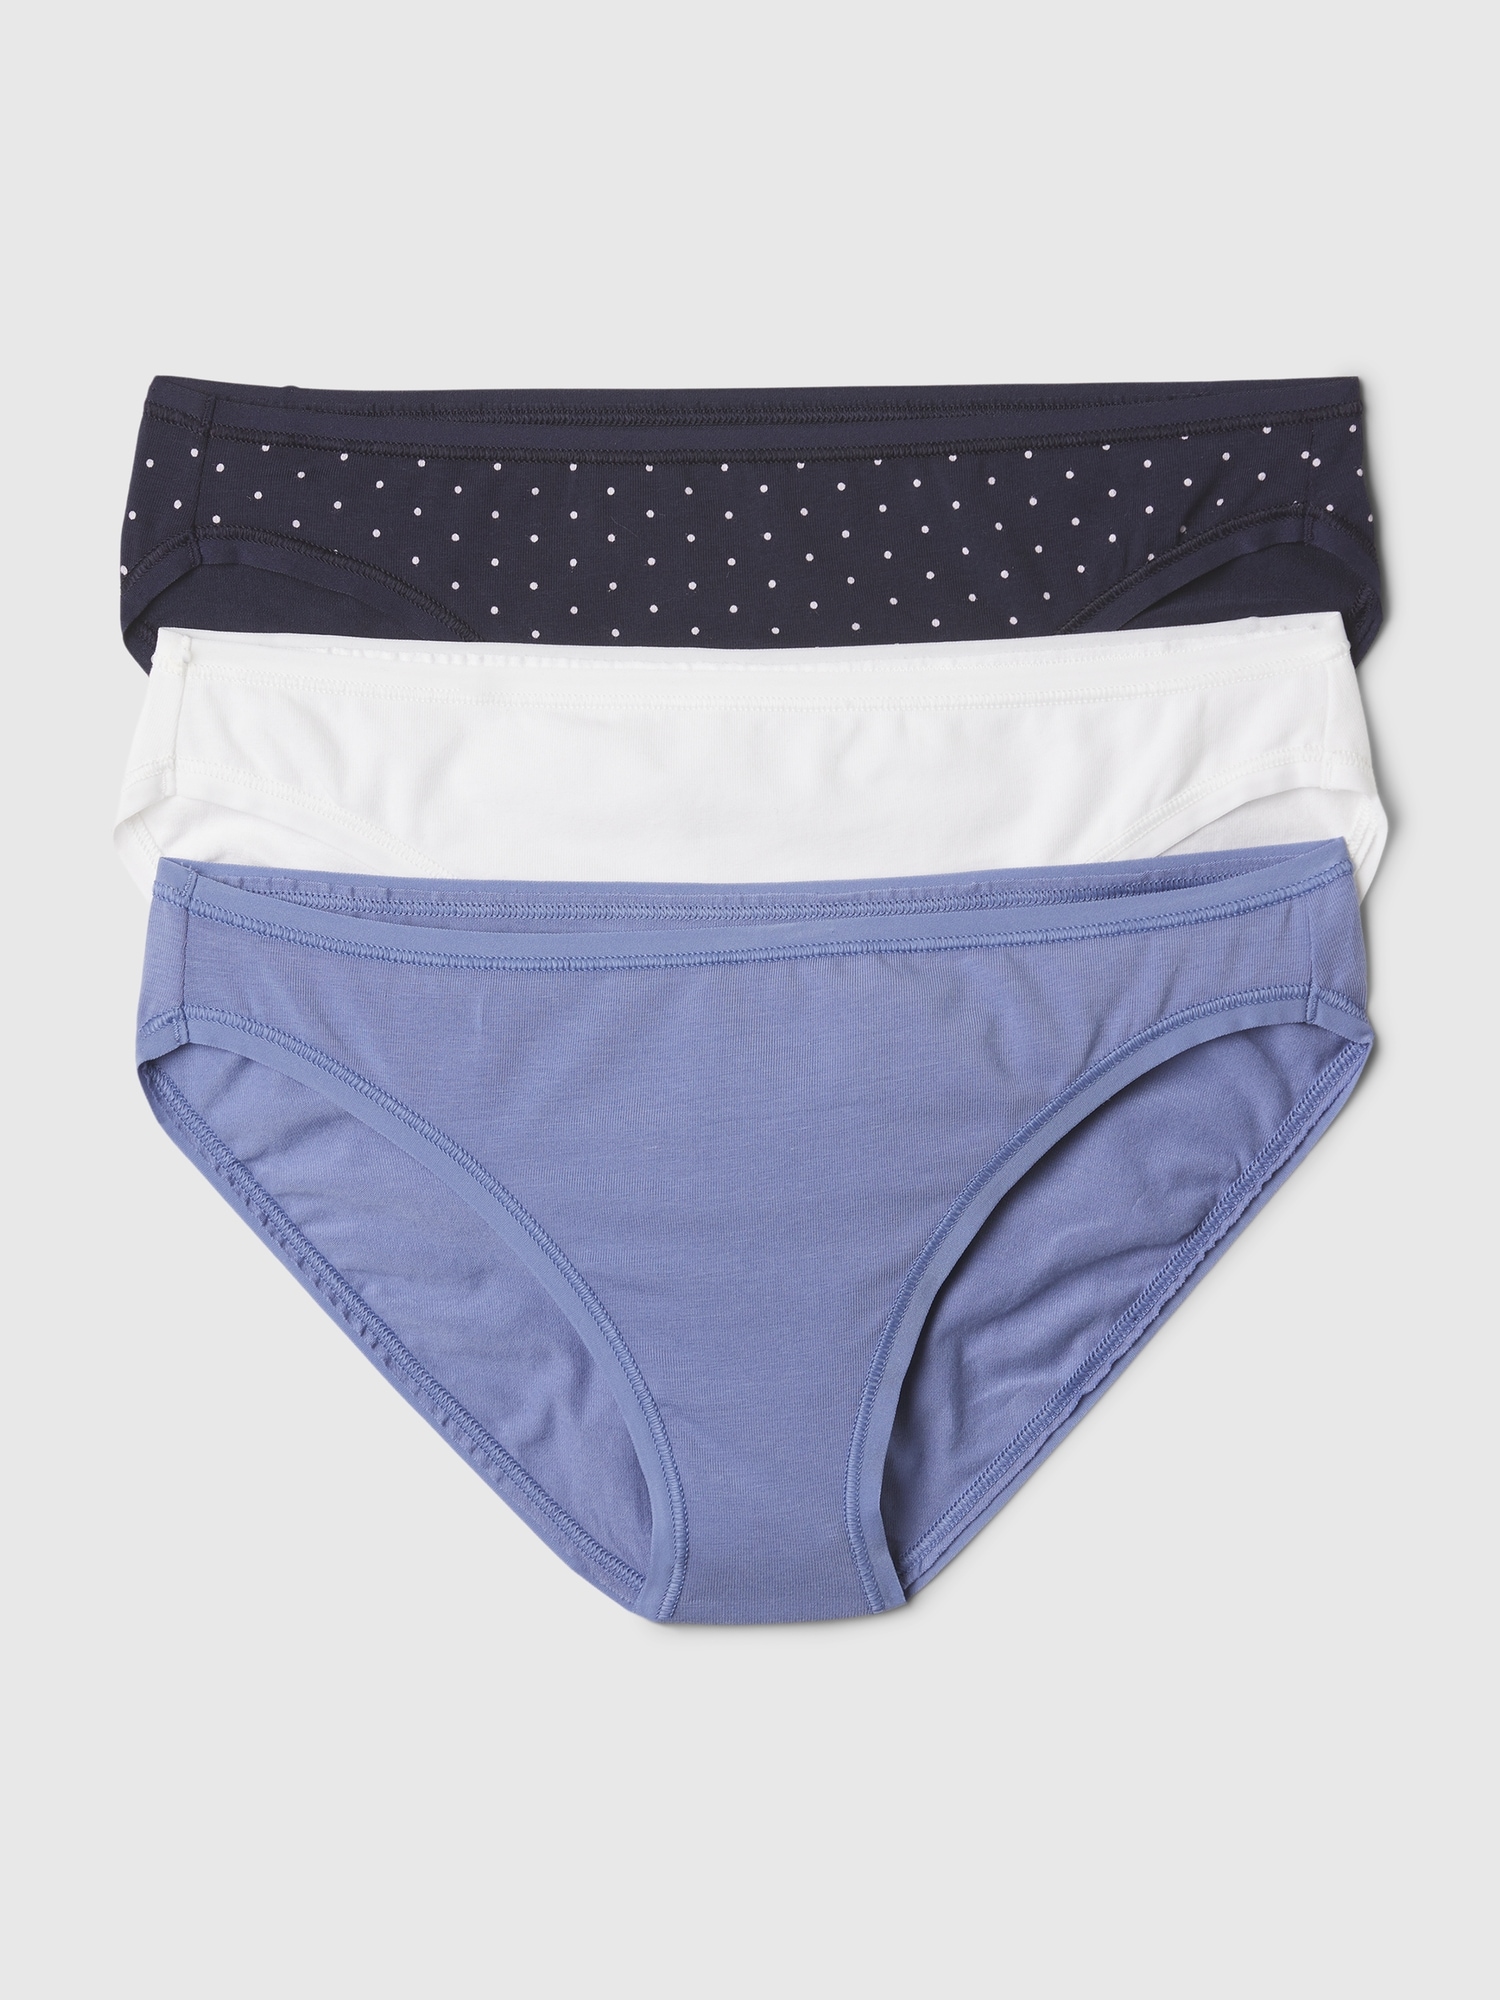 Organic cotton bikini underwear - set of 2 panties